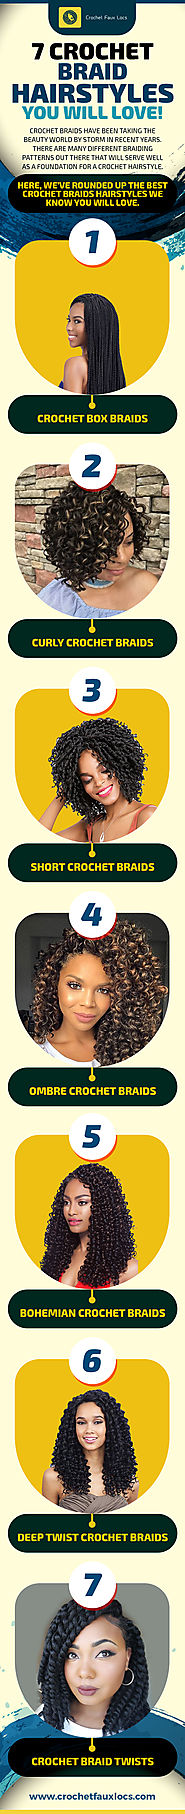 7 Crochet Braids Hairstyles You will Love!